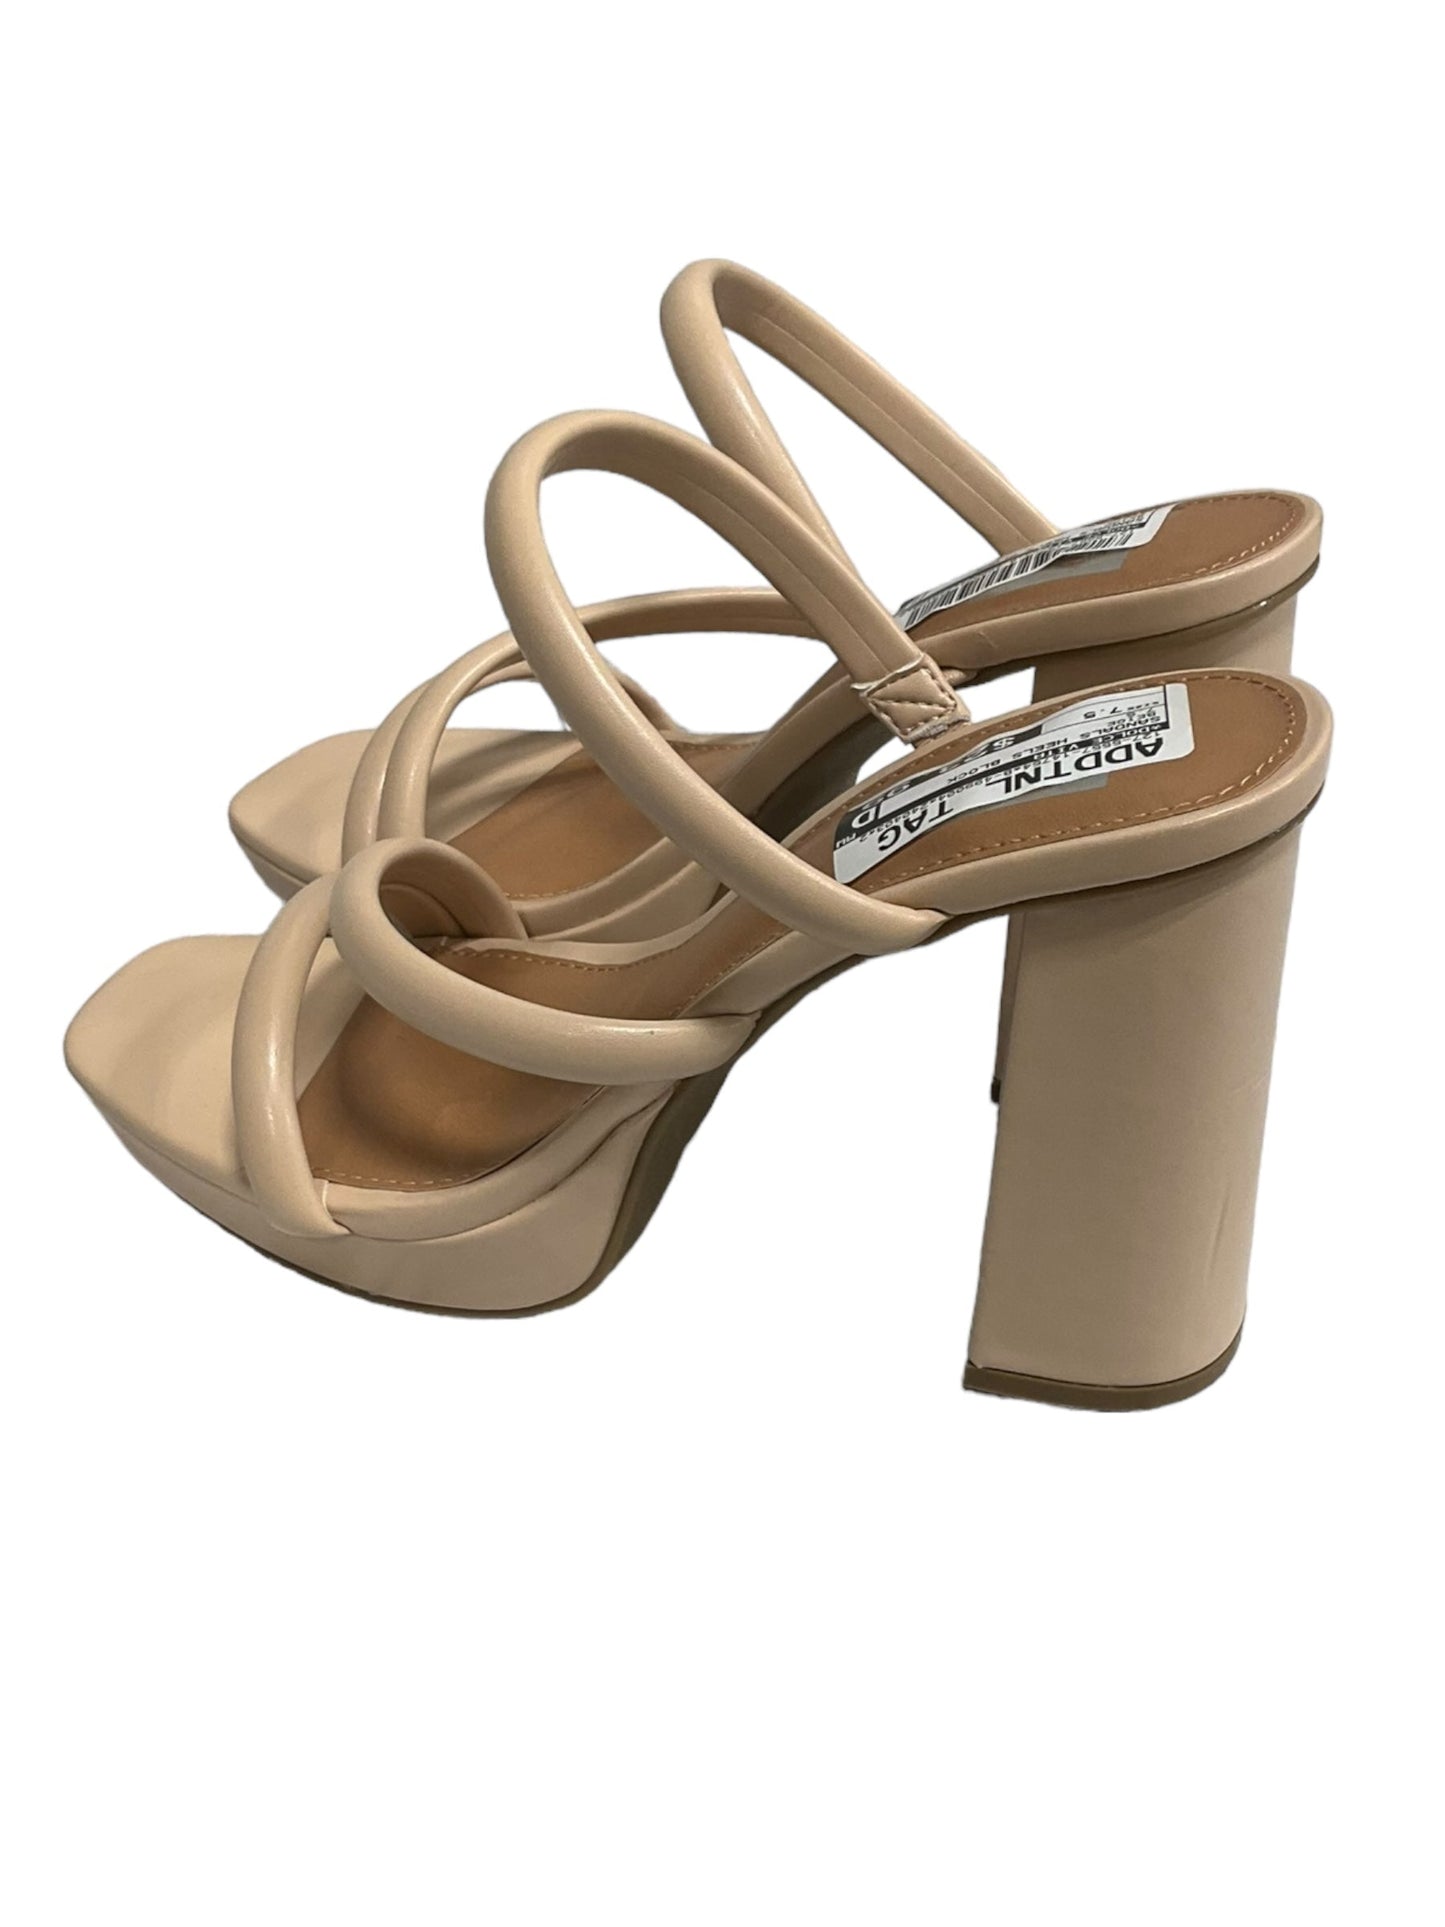 Sandals Heels Block By Dolce Vita  Size: 7.5